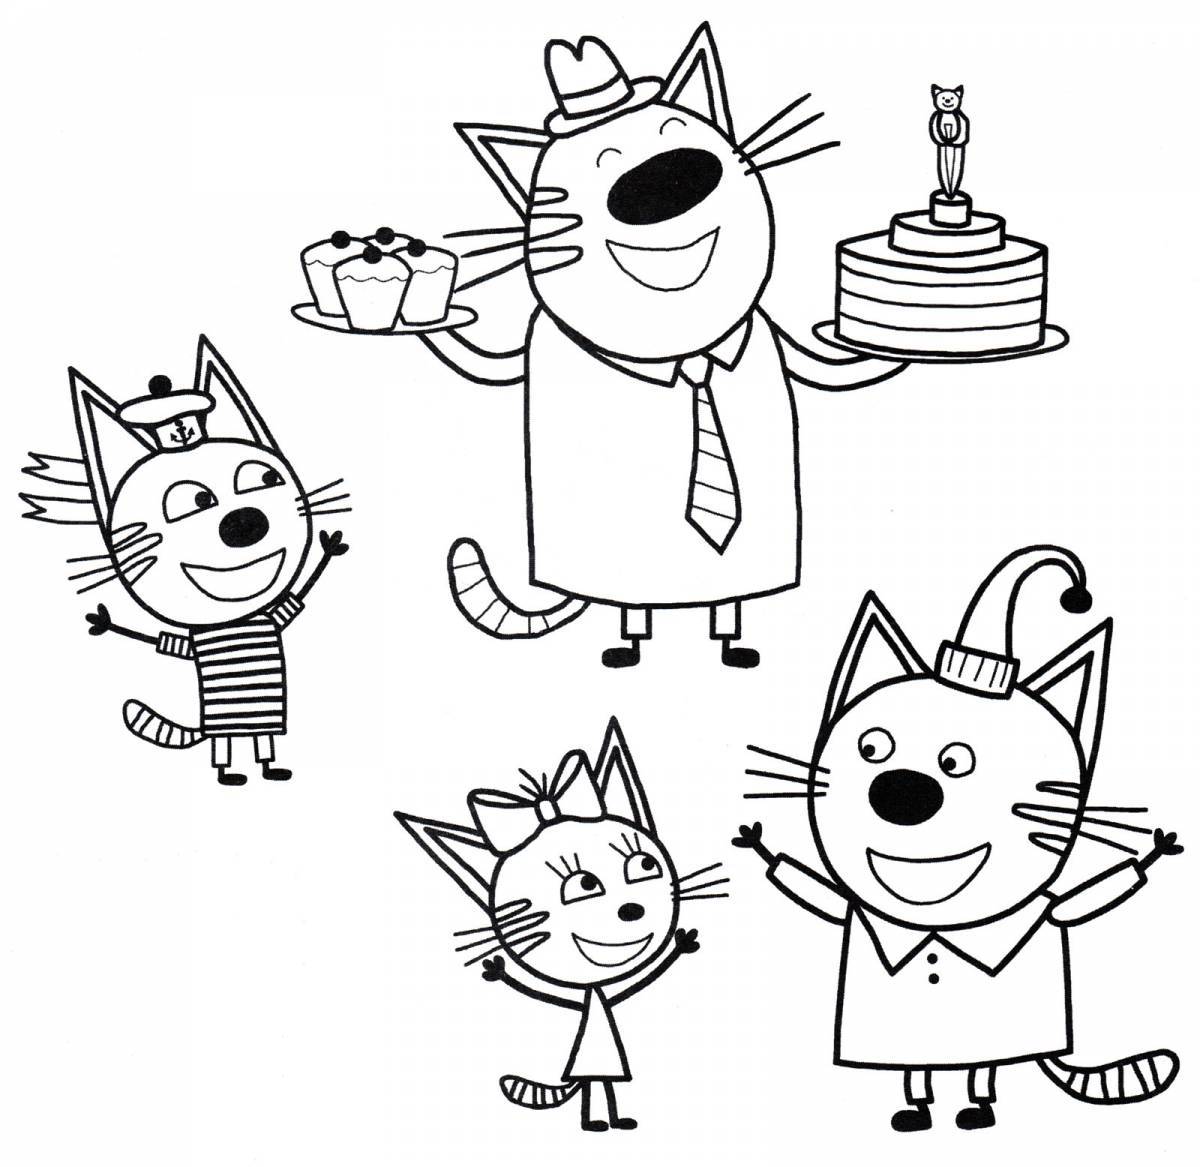 Great 3 cats coloring book for preschoolers